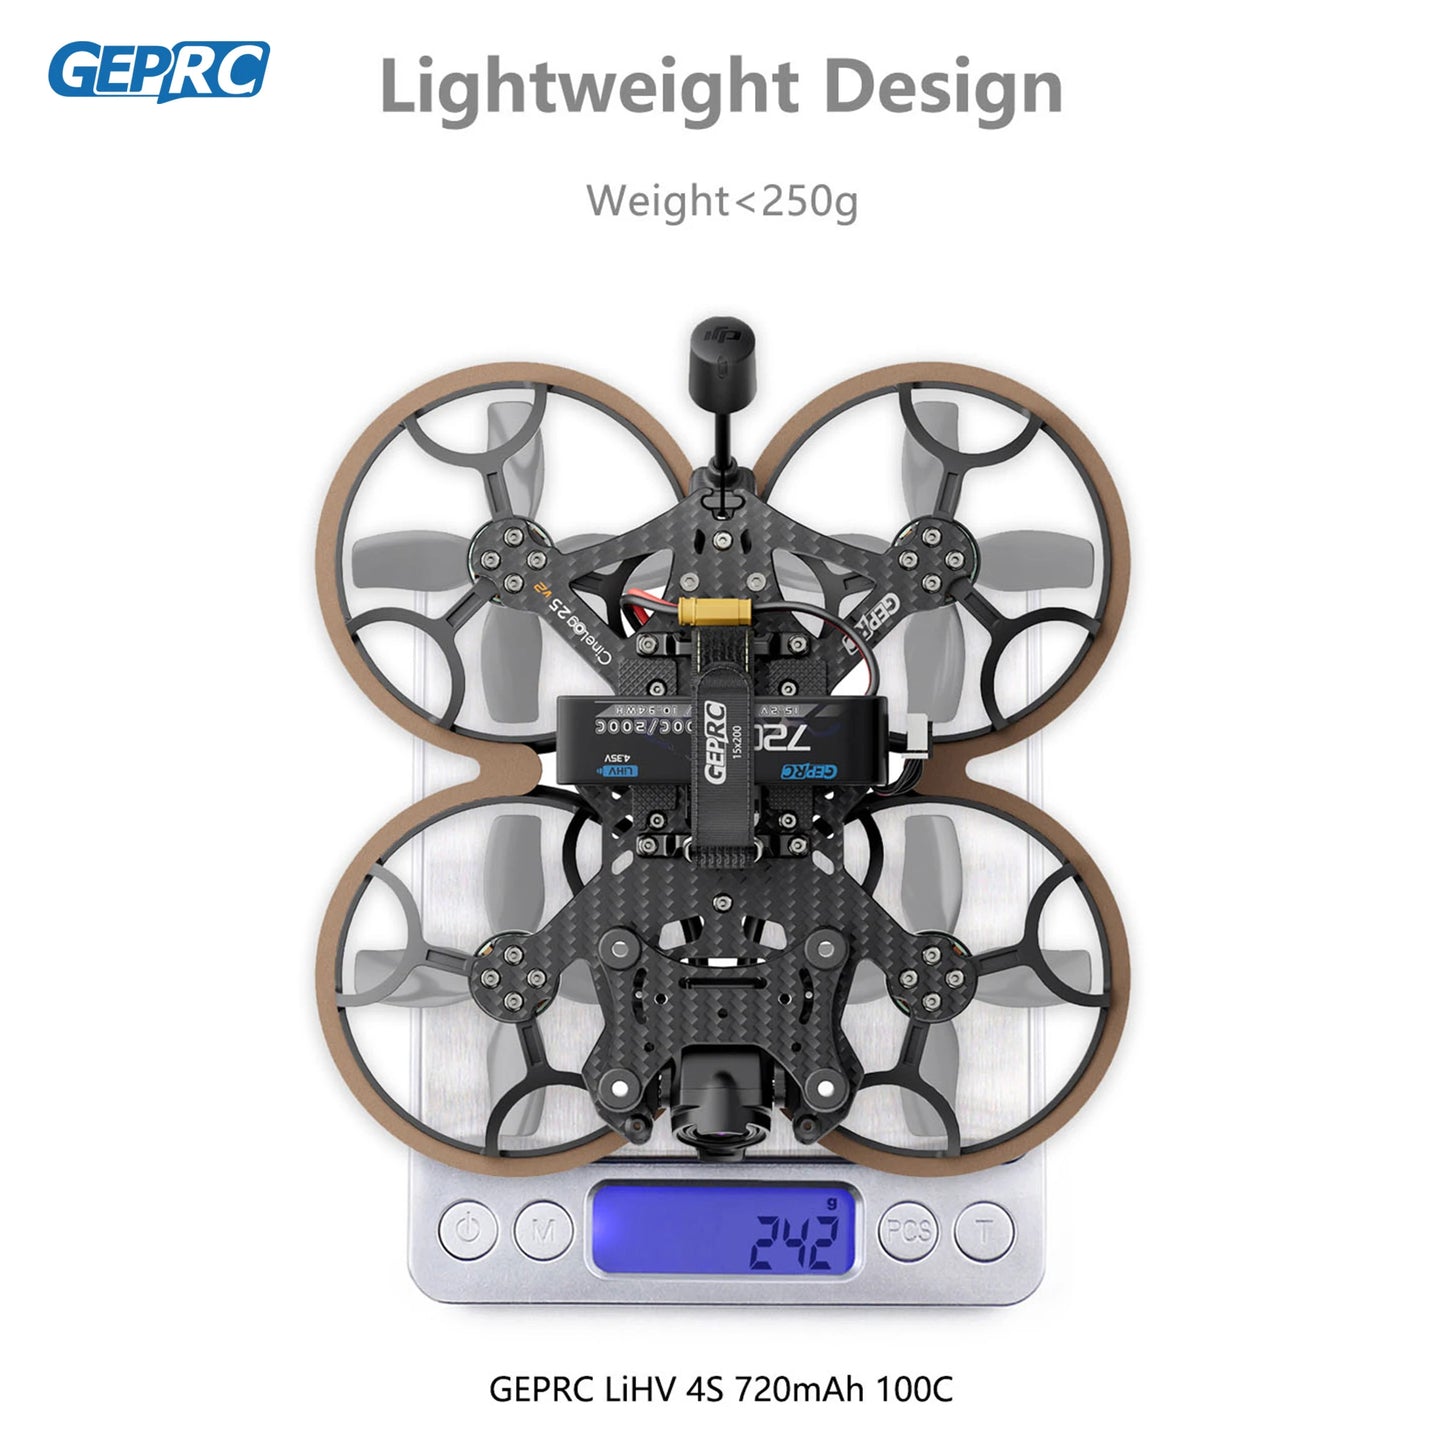 GEPRC Cinelog25 V2 HD O3 FPV, GEPRC Lightweight Design Weight250g De HMd6 U30 5002/